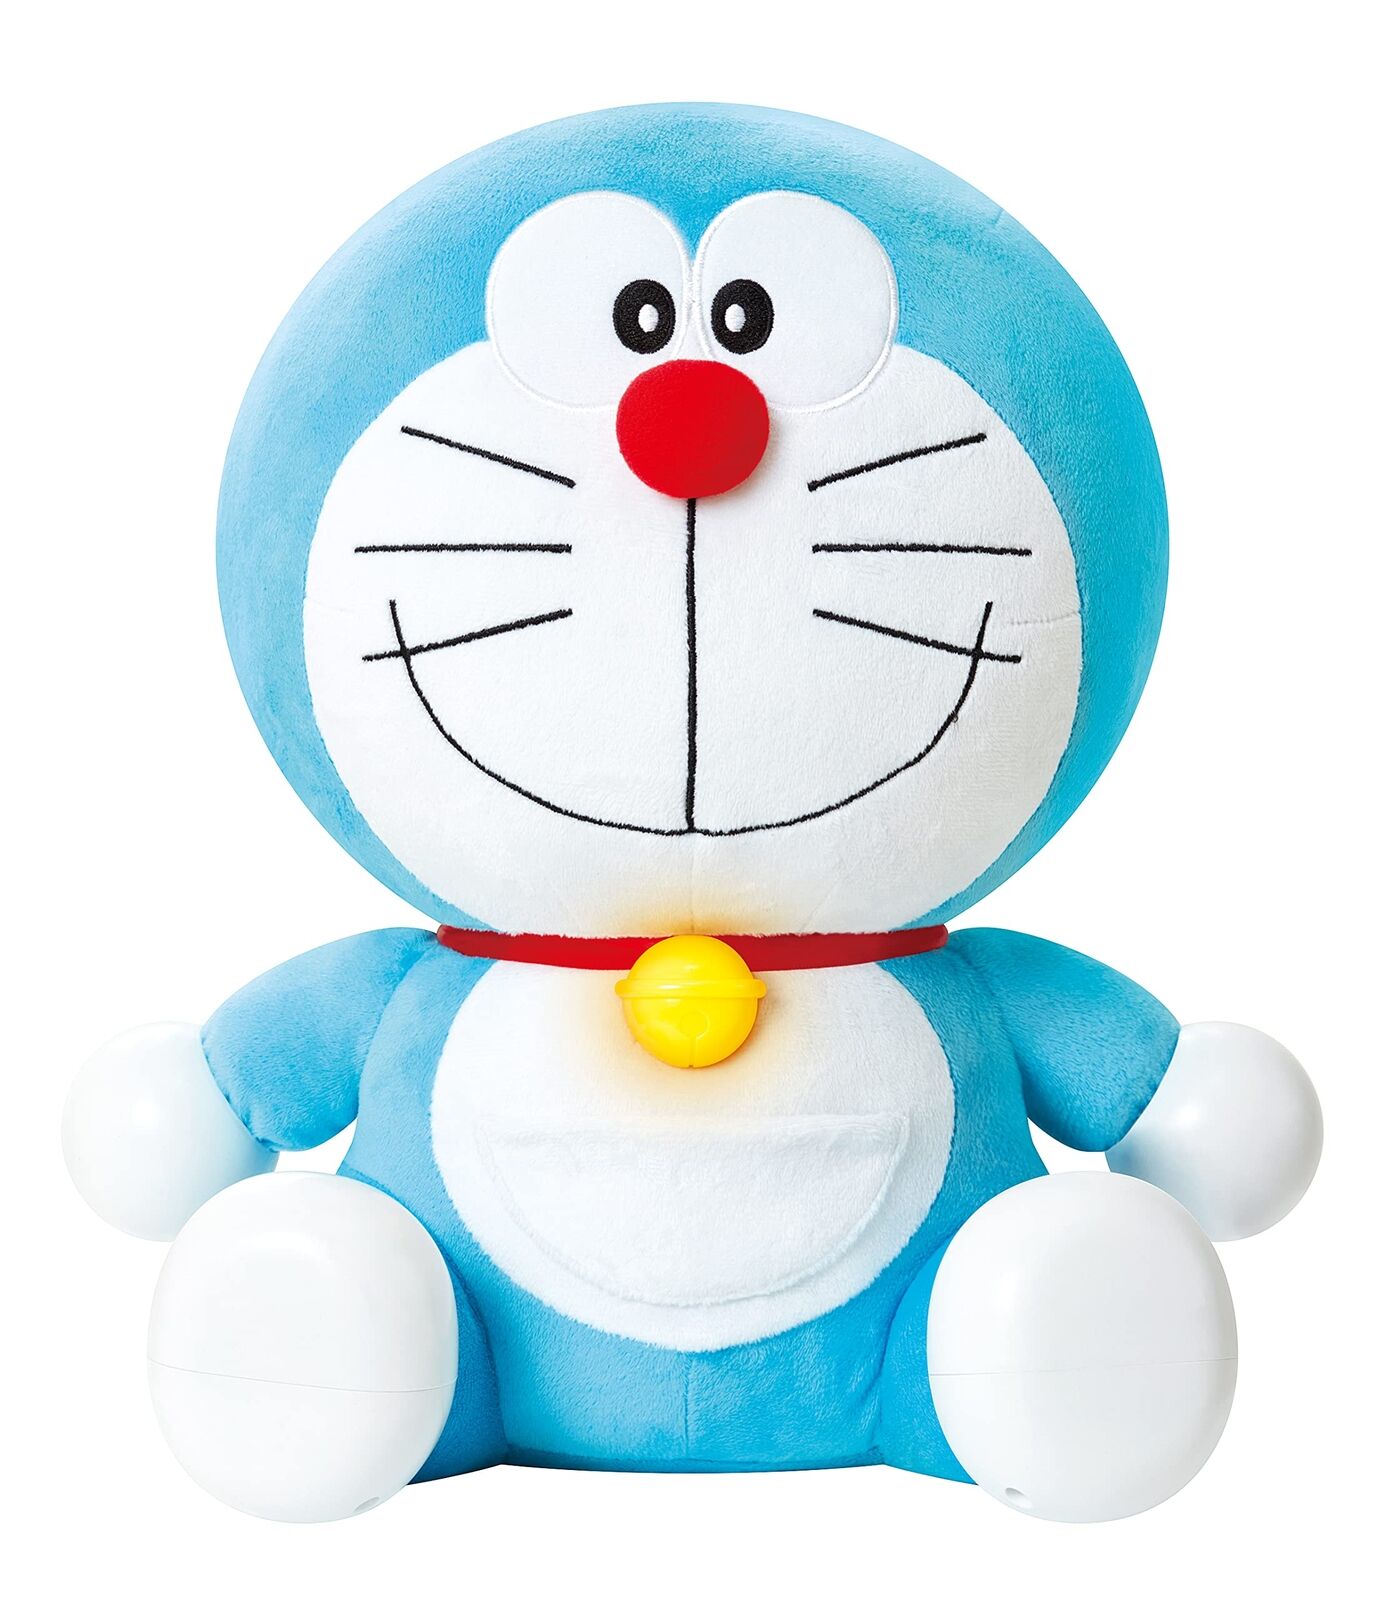 AGATSUMA Tell me a lot, Talking Doraemon